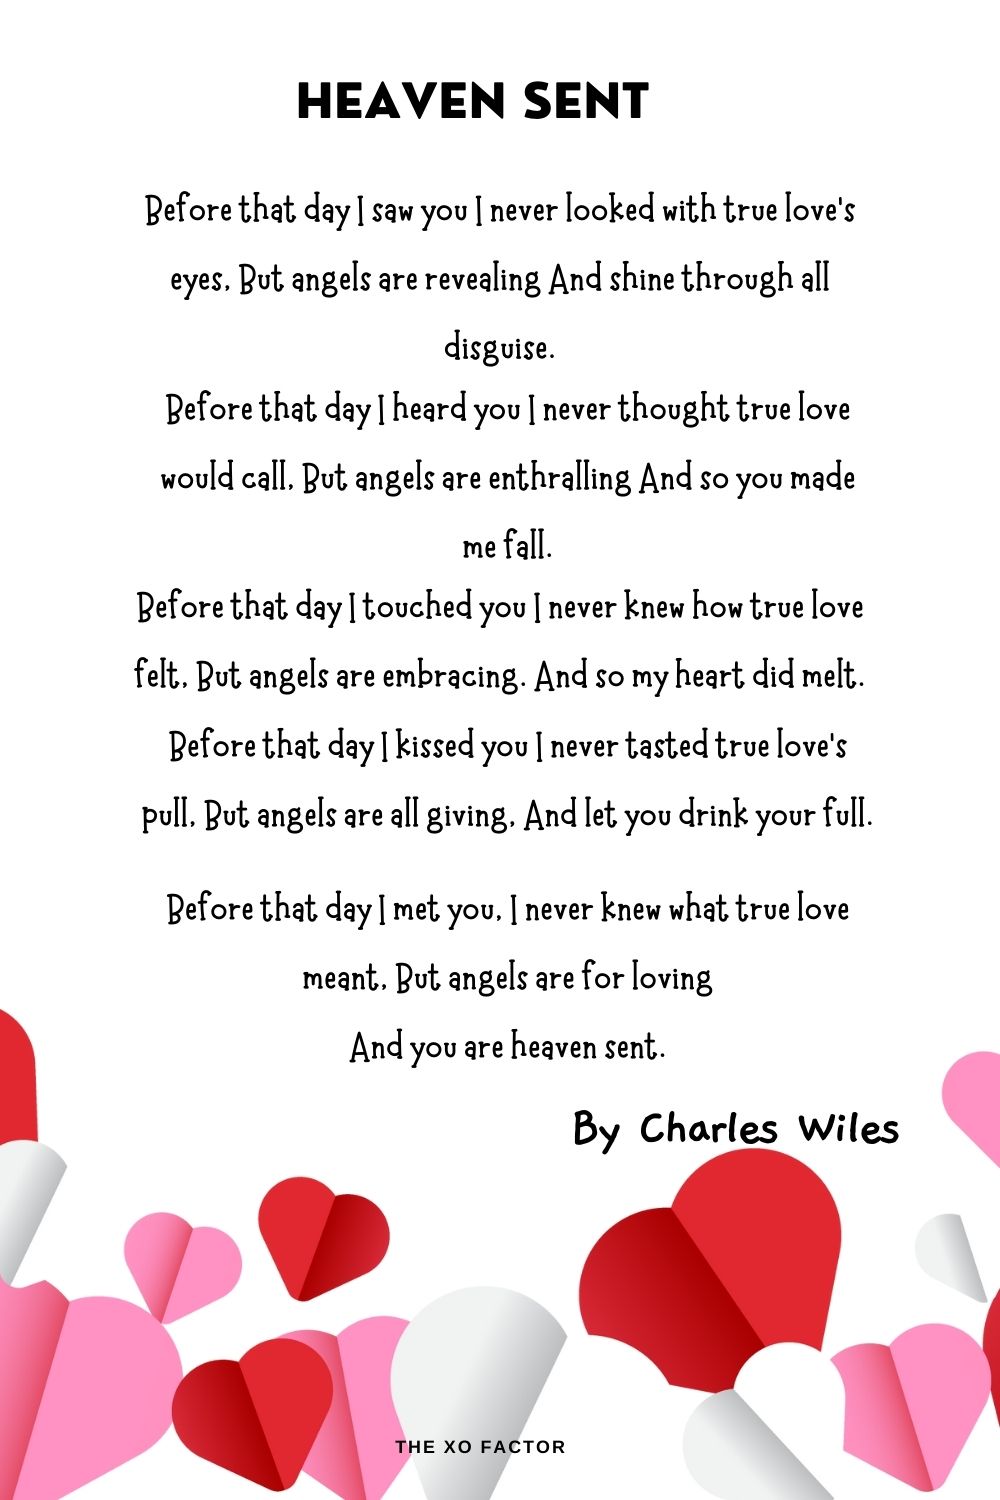 Heaven Sent Poem by Charles Wiles 